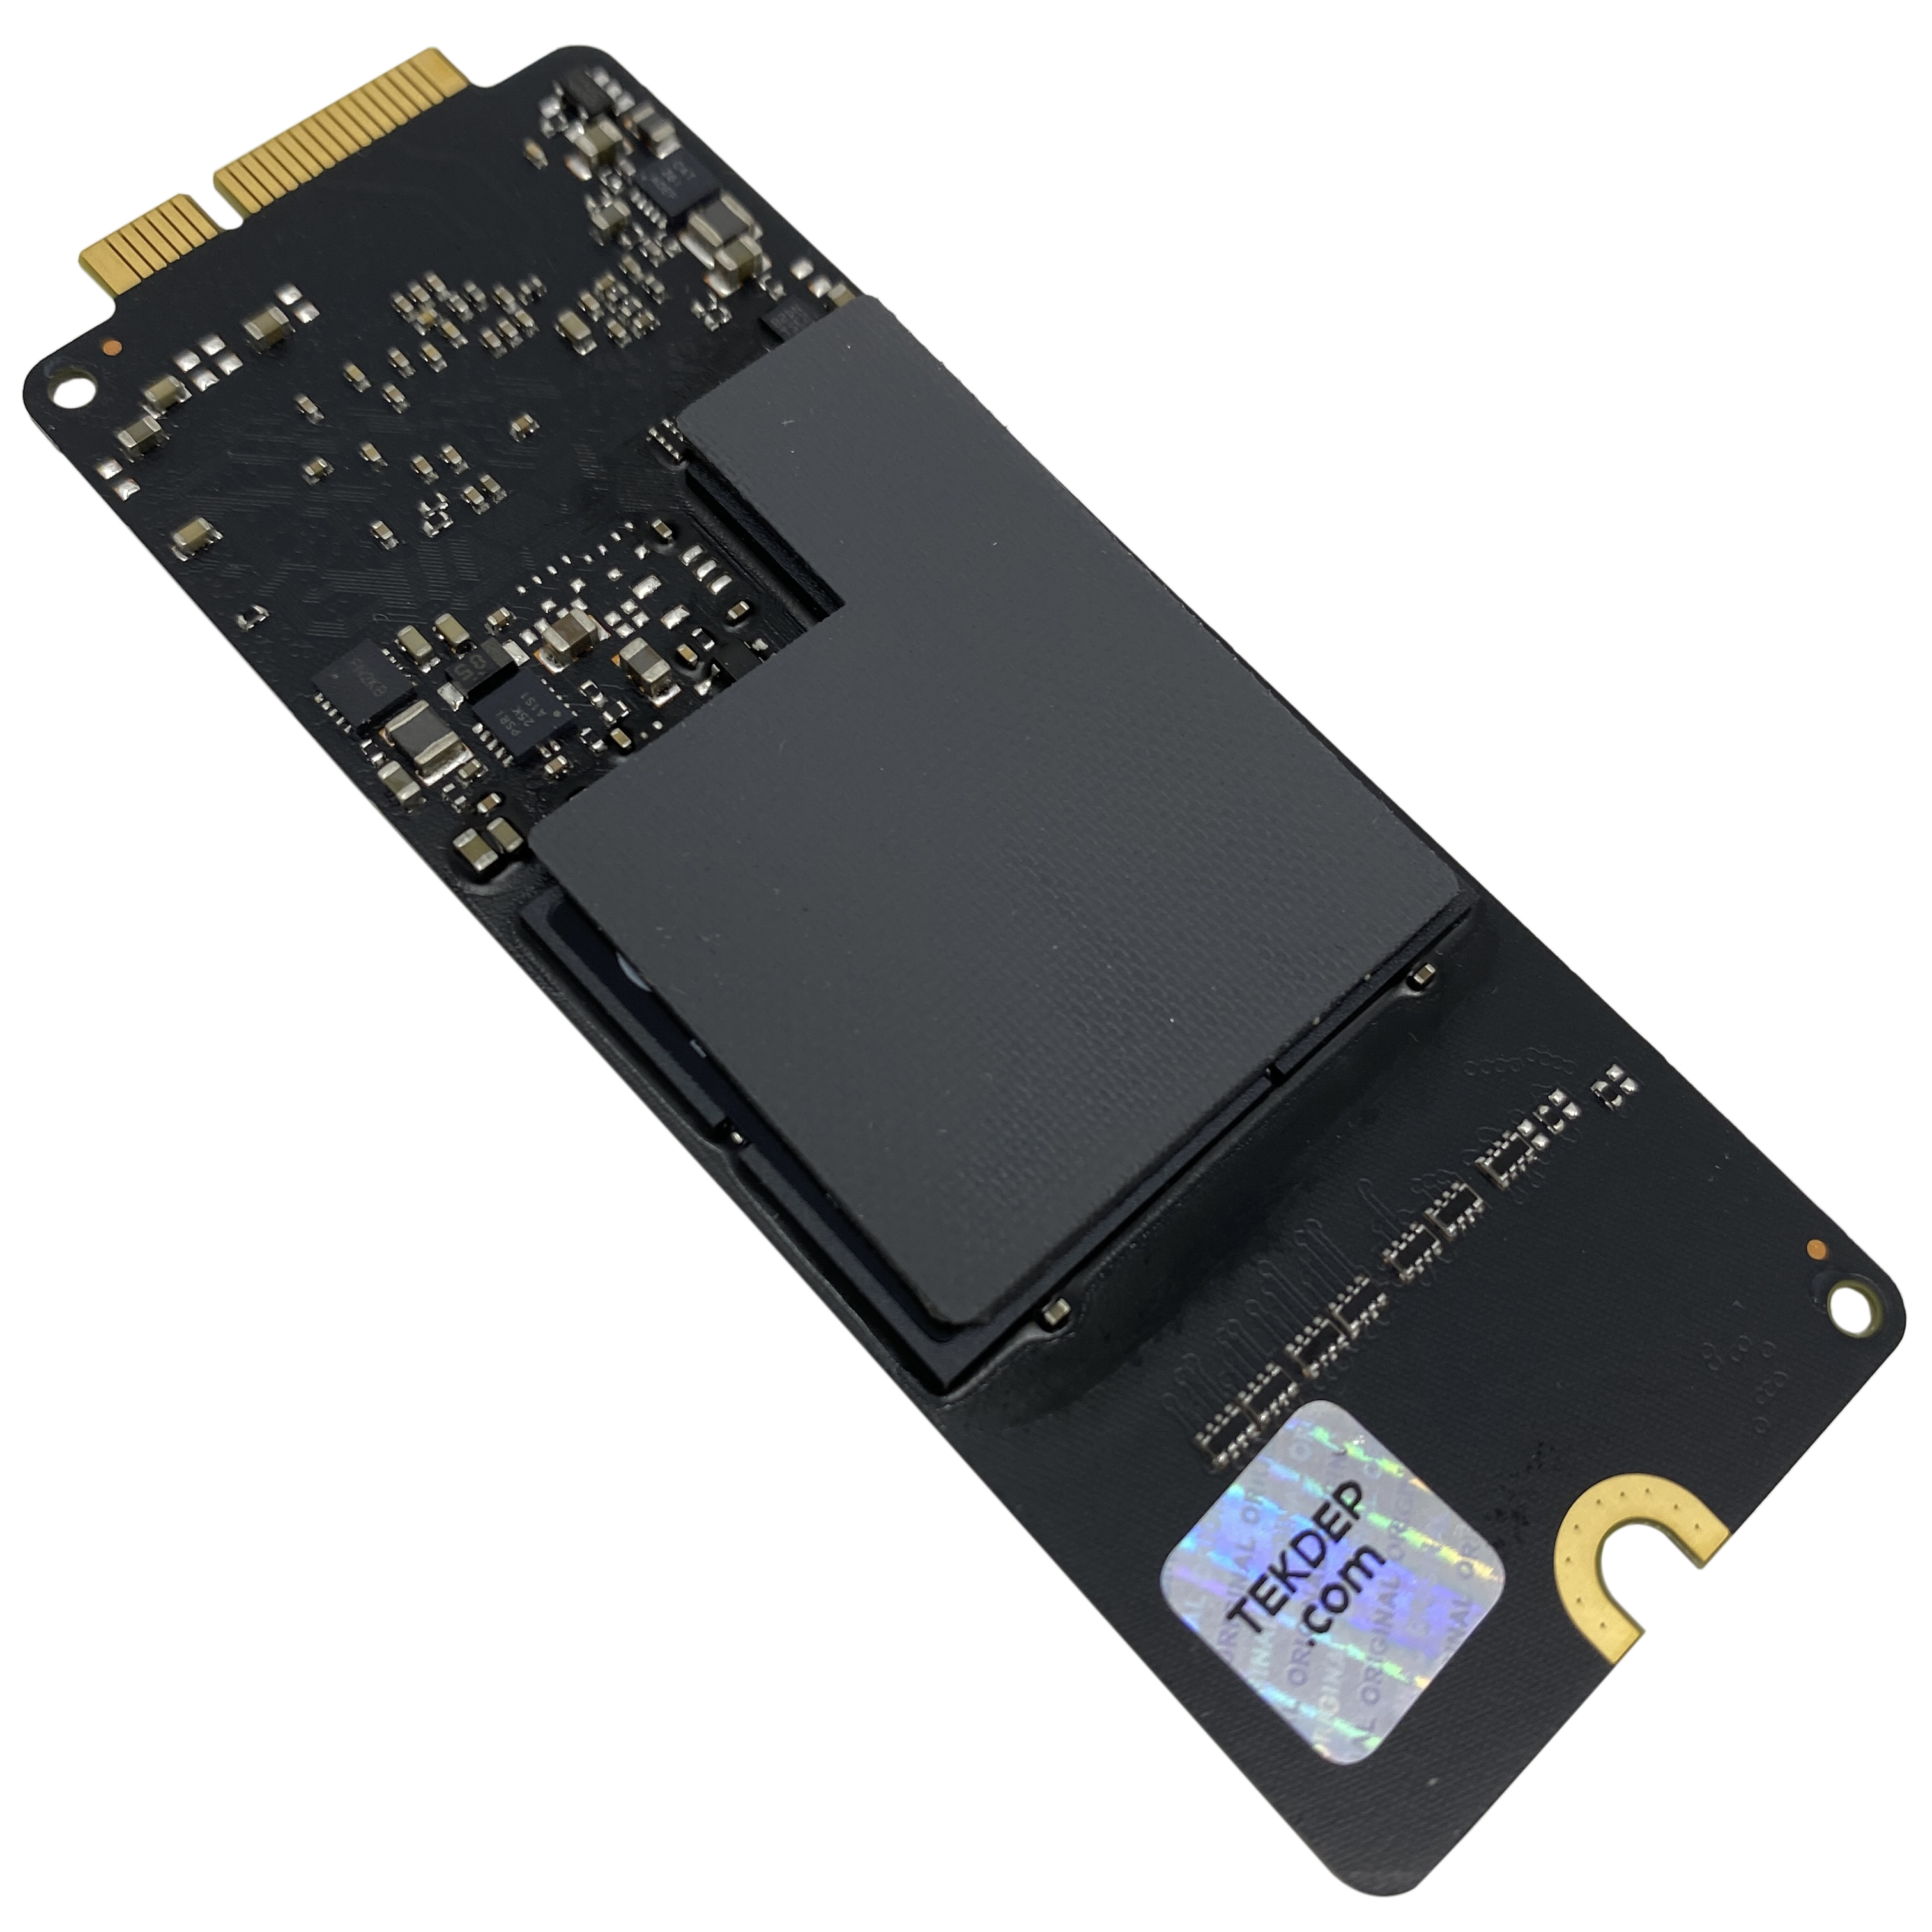 256GB SSD PCIe for Apple MacBook Pro Retina 13 A1426 A1398 Models